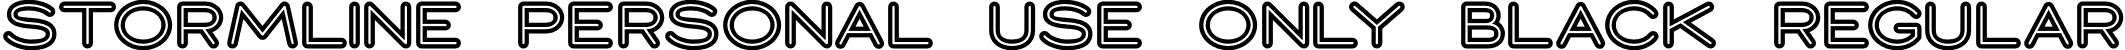 Stormline PERSONAL USE ONLY Black Regular font | StormlinePersonalUseOnlyBlack-0WqrP.otf